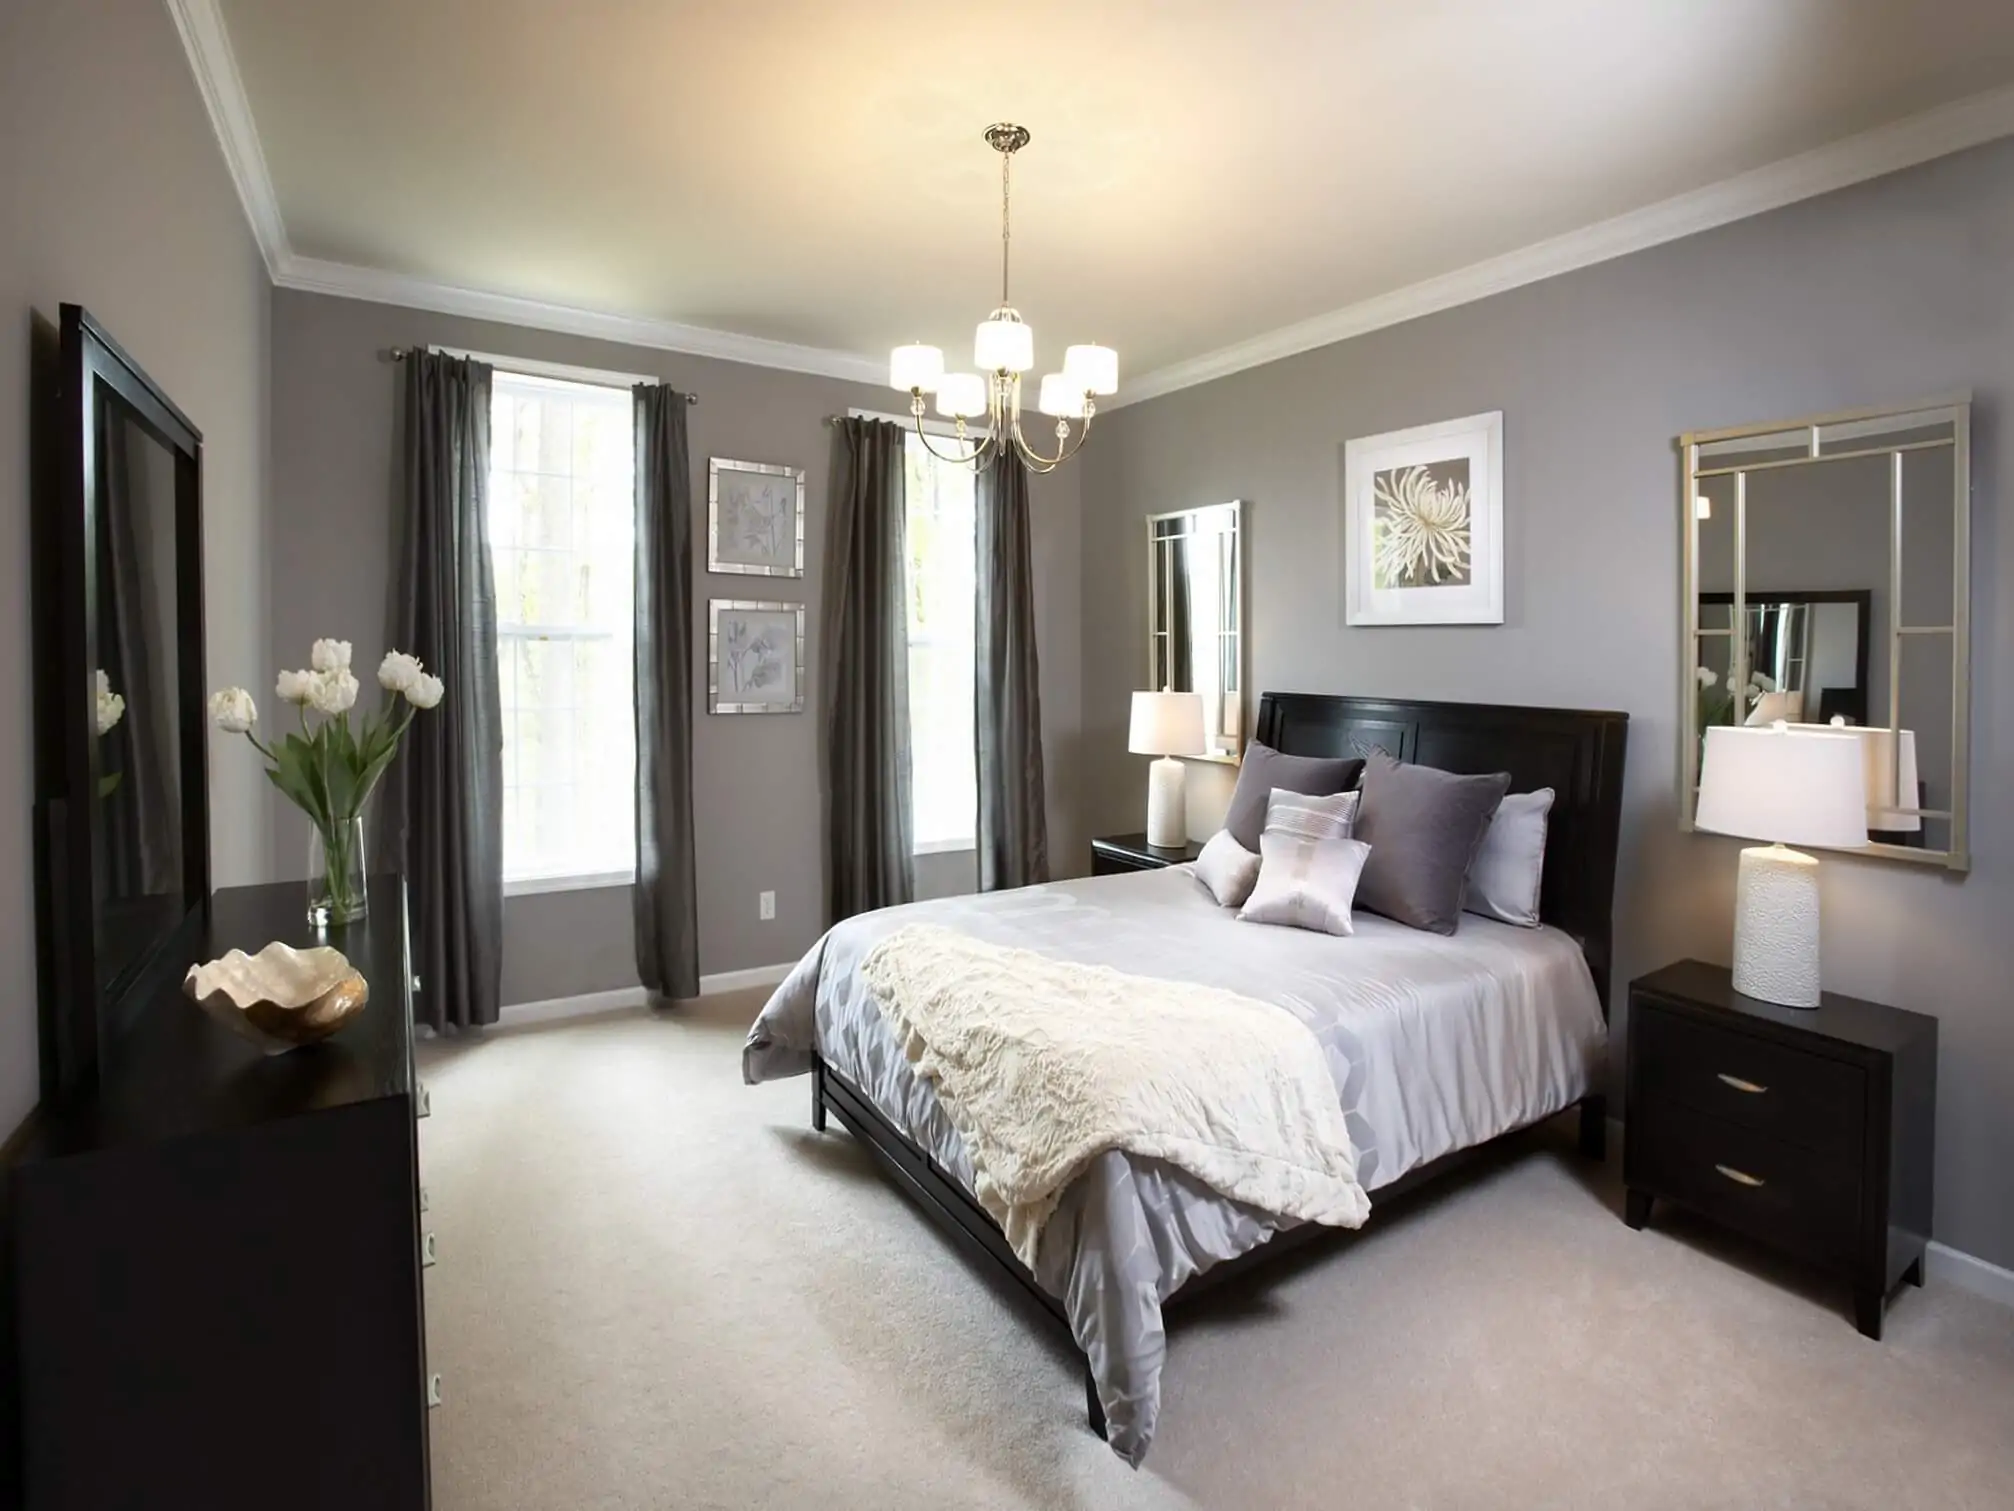 Grey and Black bedroom